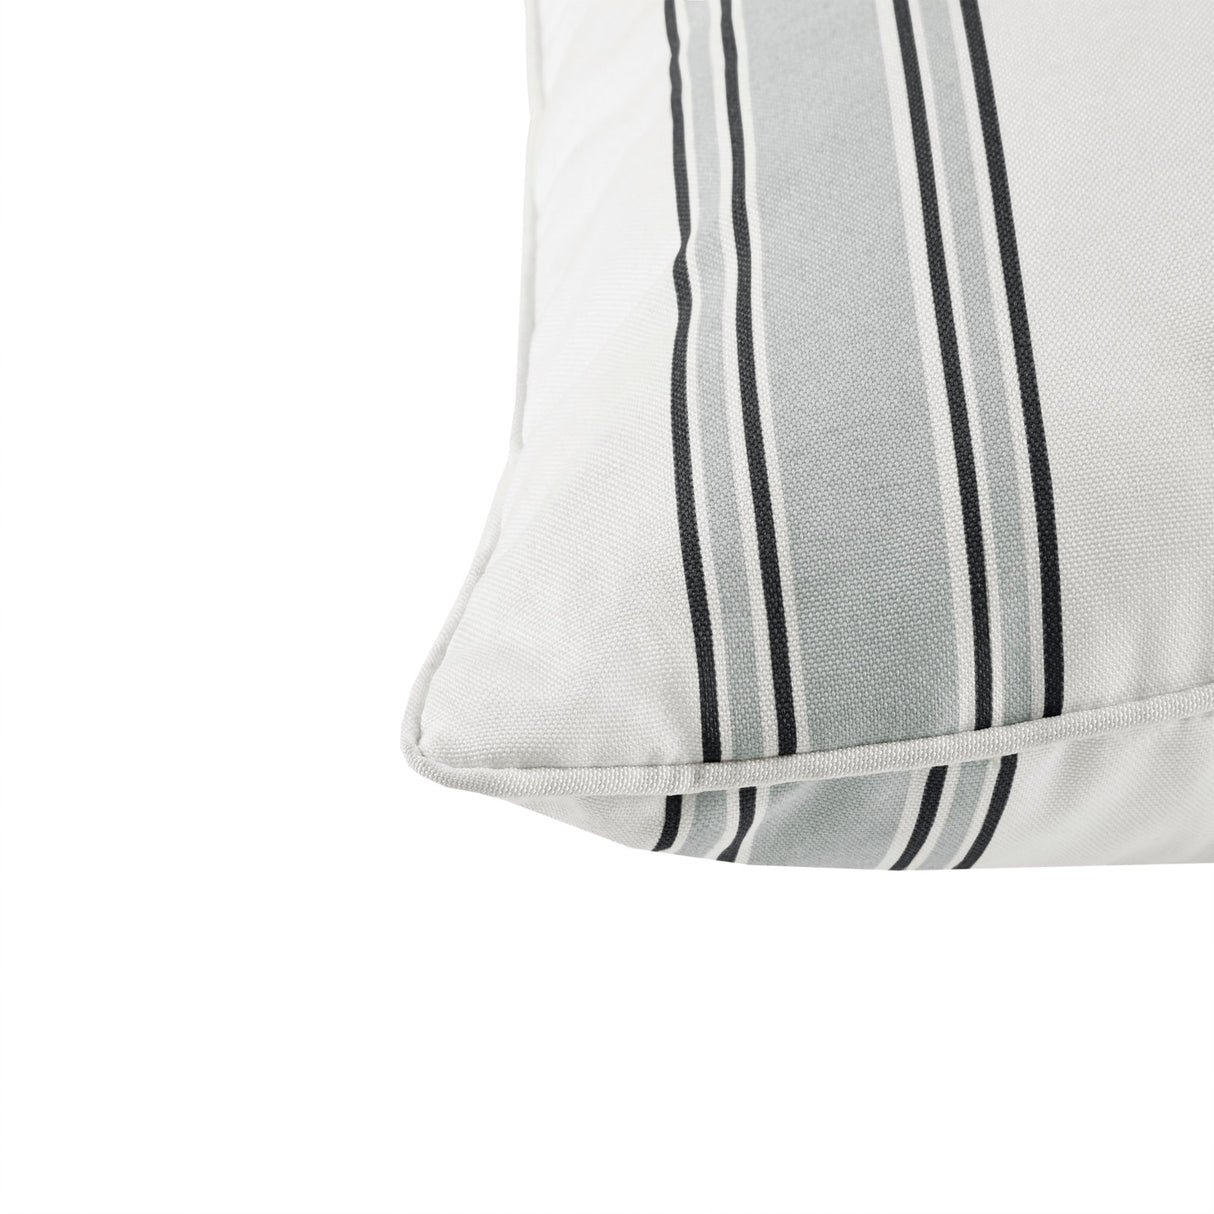 Madison Park Bolinas Printed Stripe 3M Scotchgard Outdoor Square Pillow - 20x20"